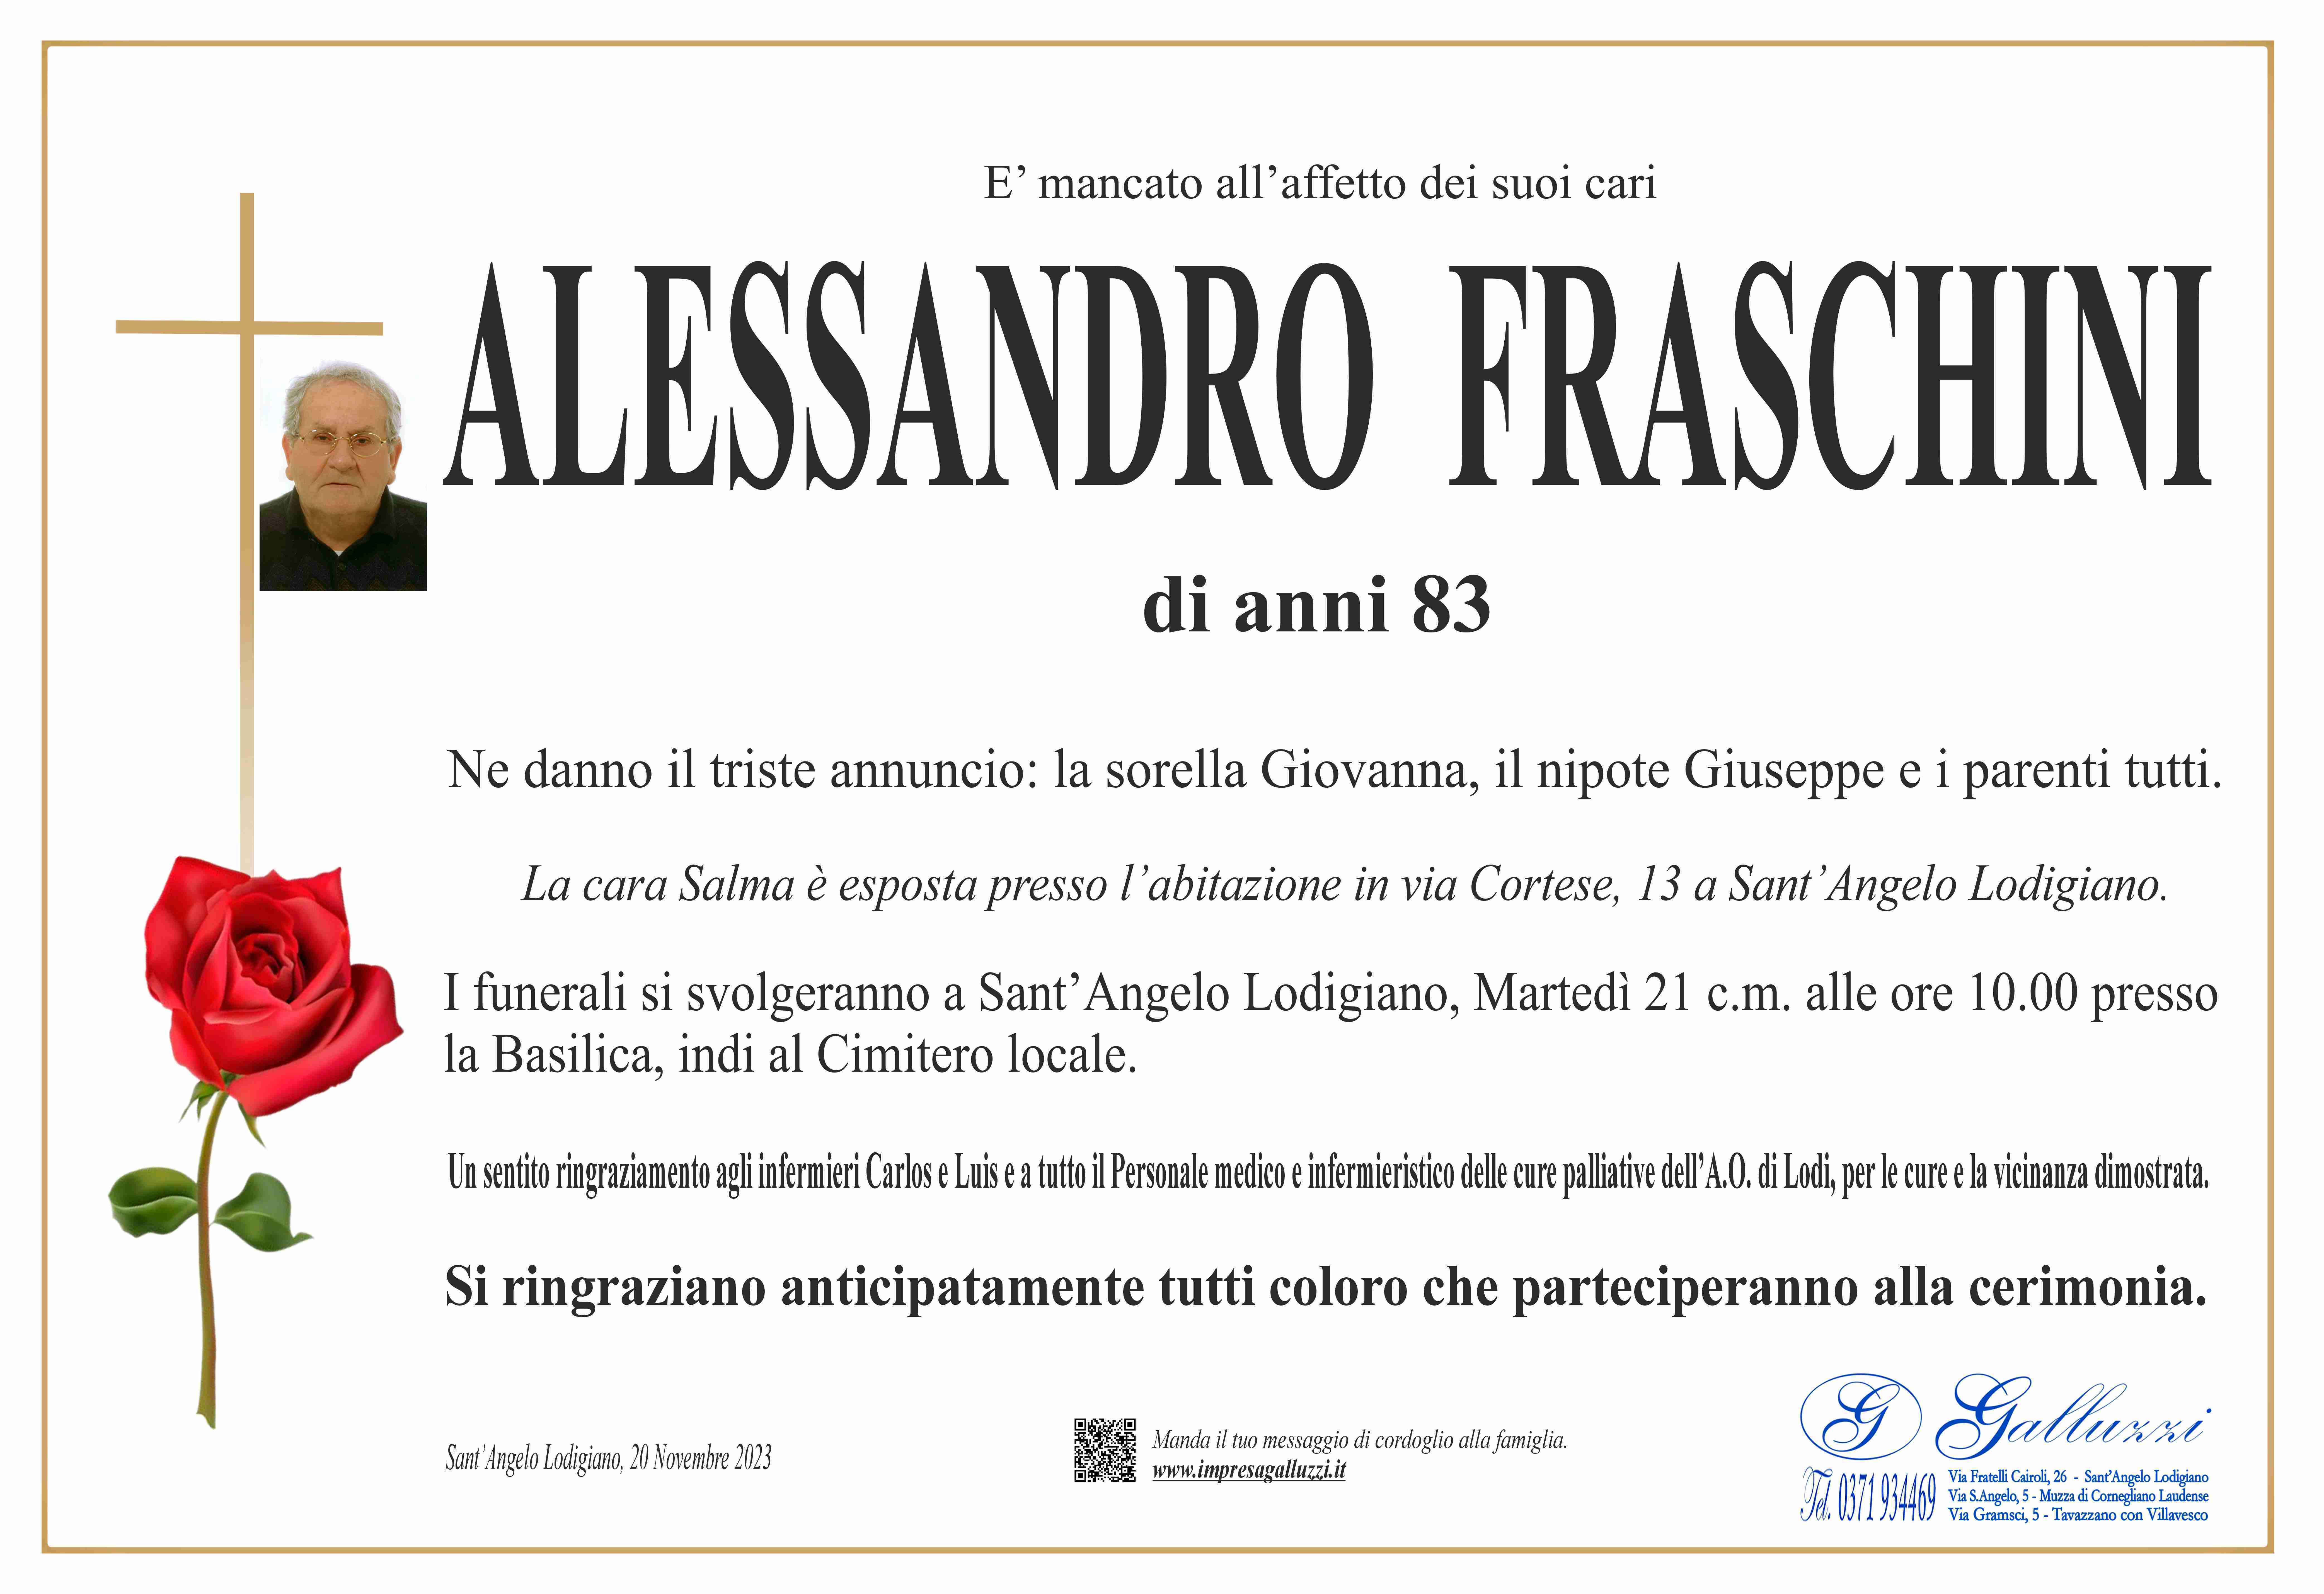 Alessandro Fraschini